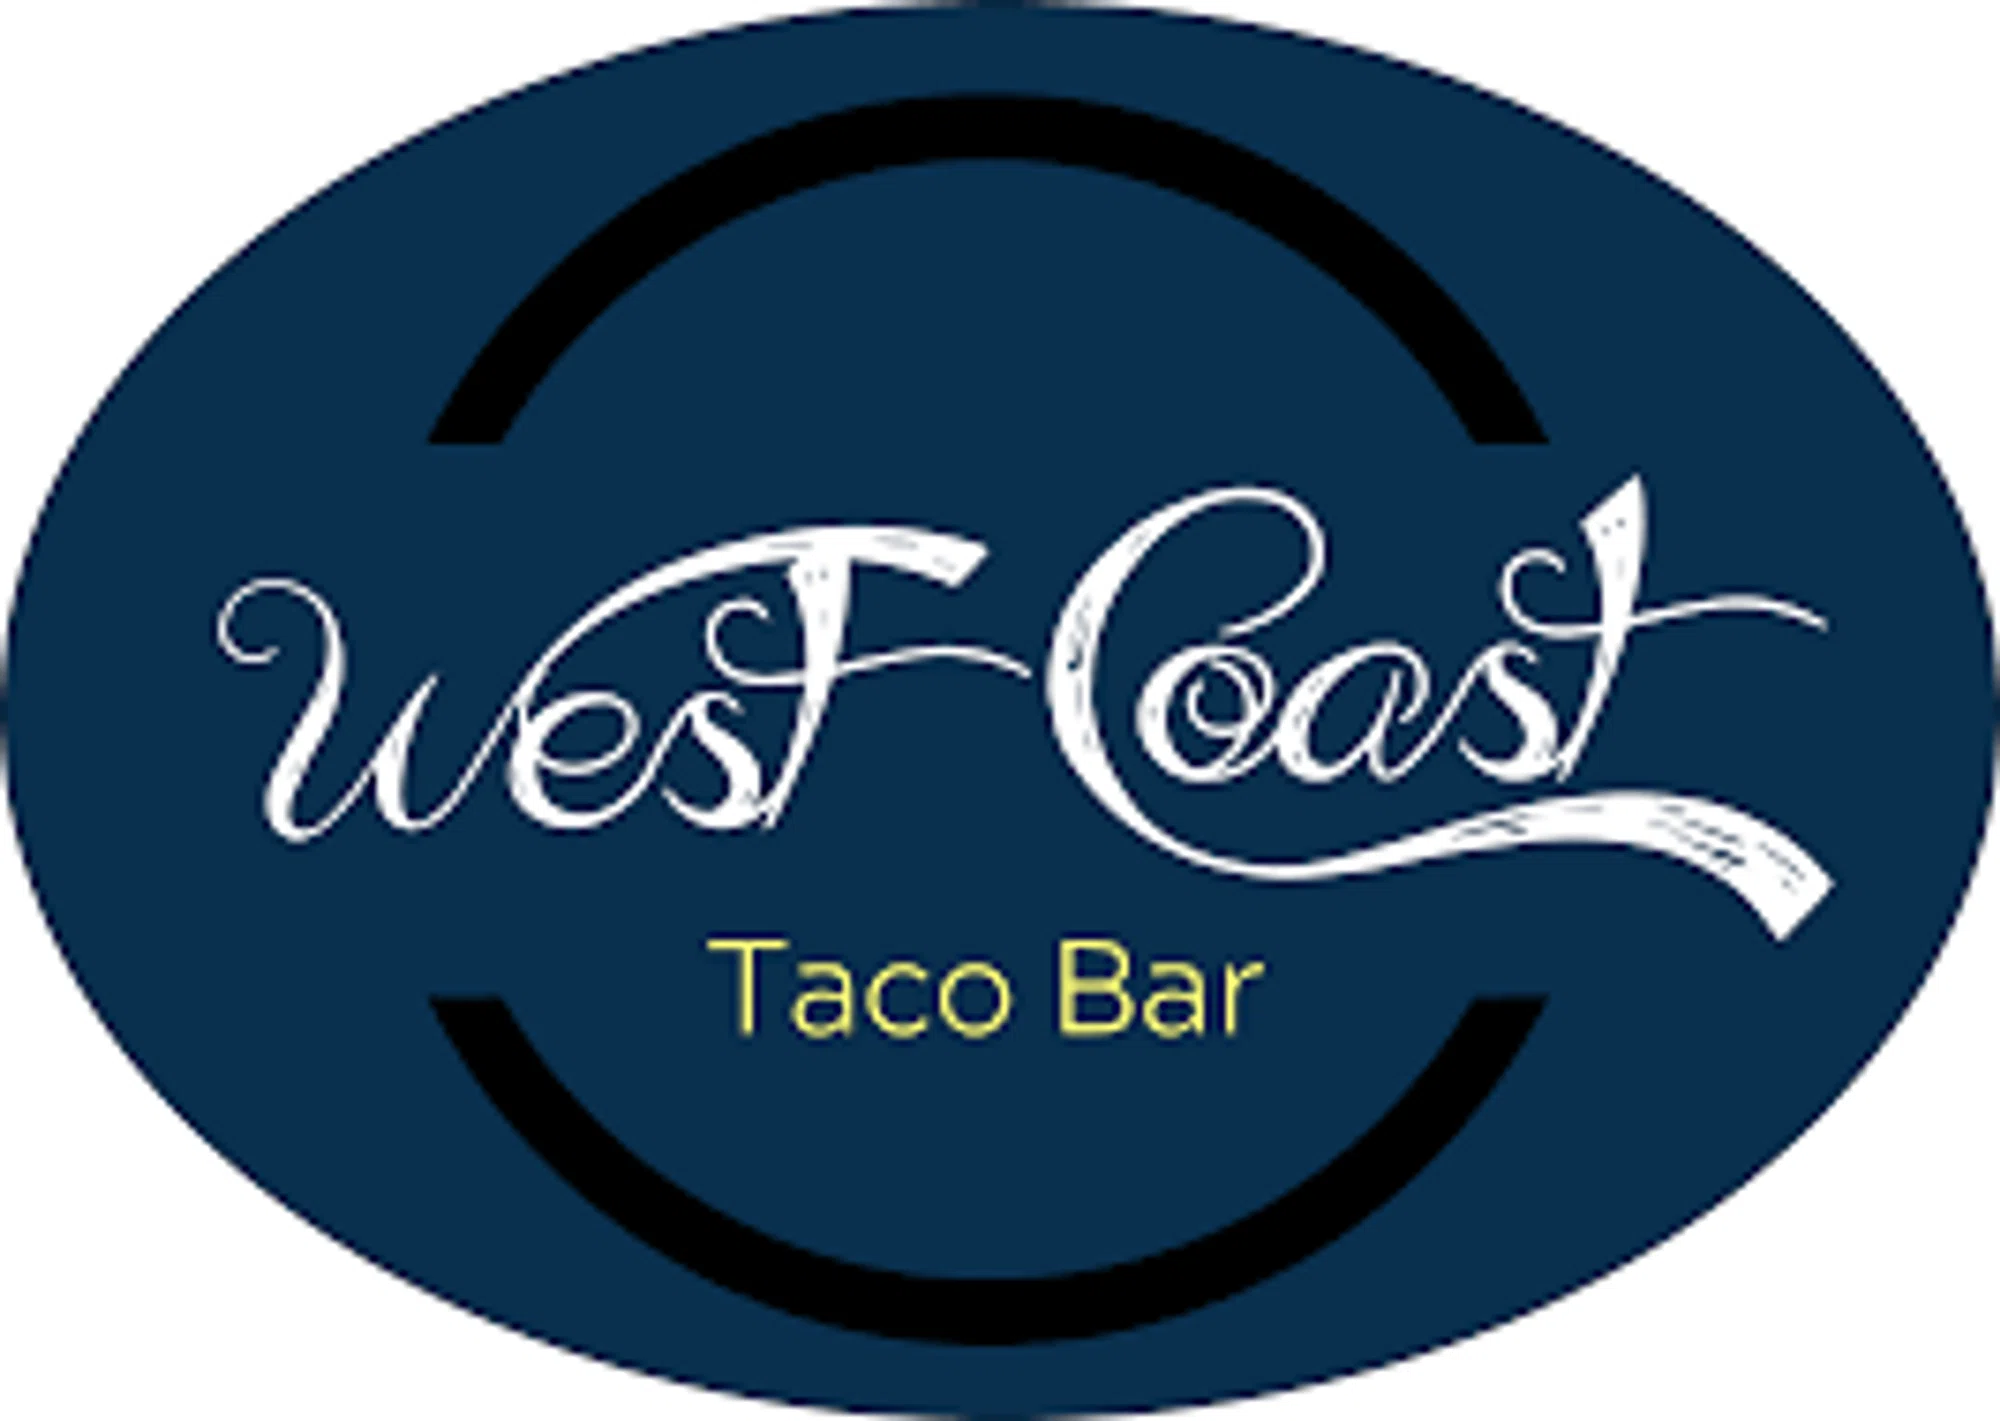 West Coast Taco Bar